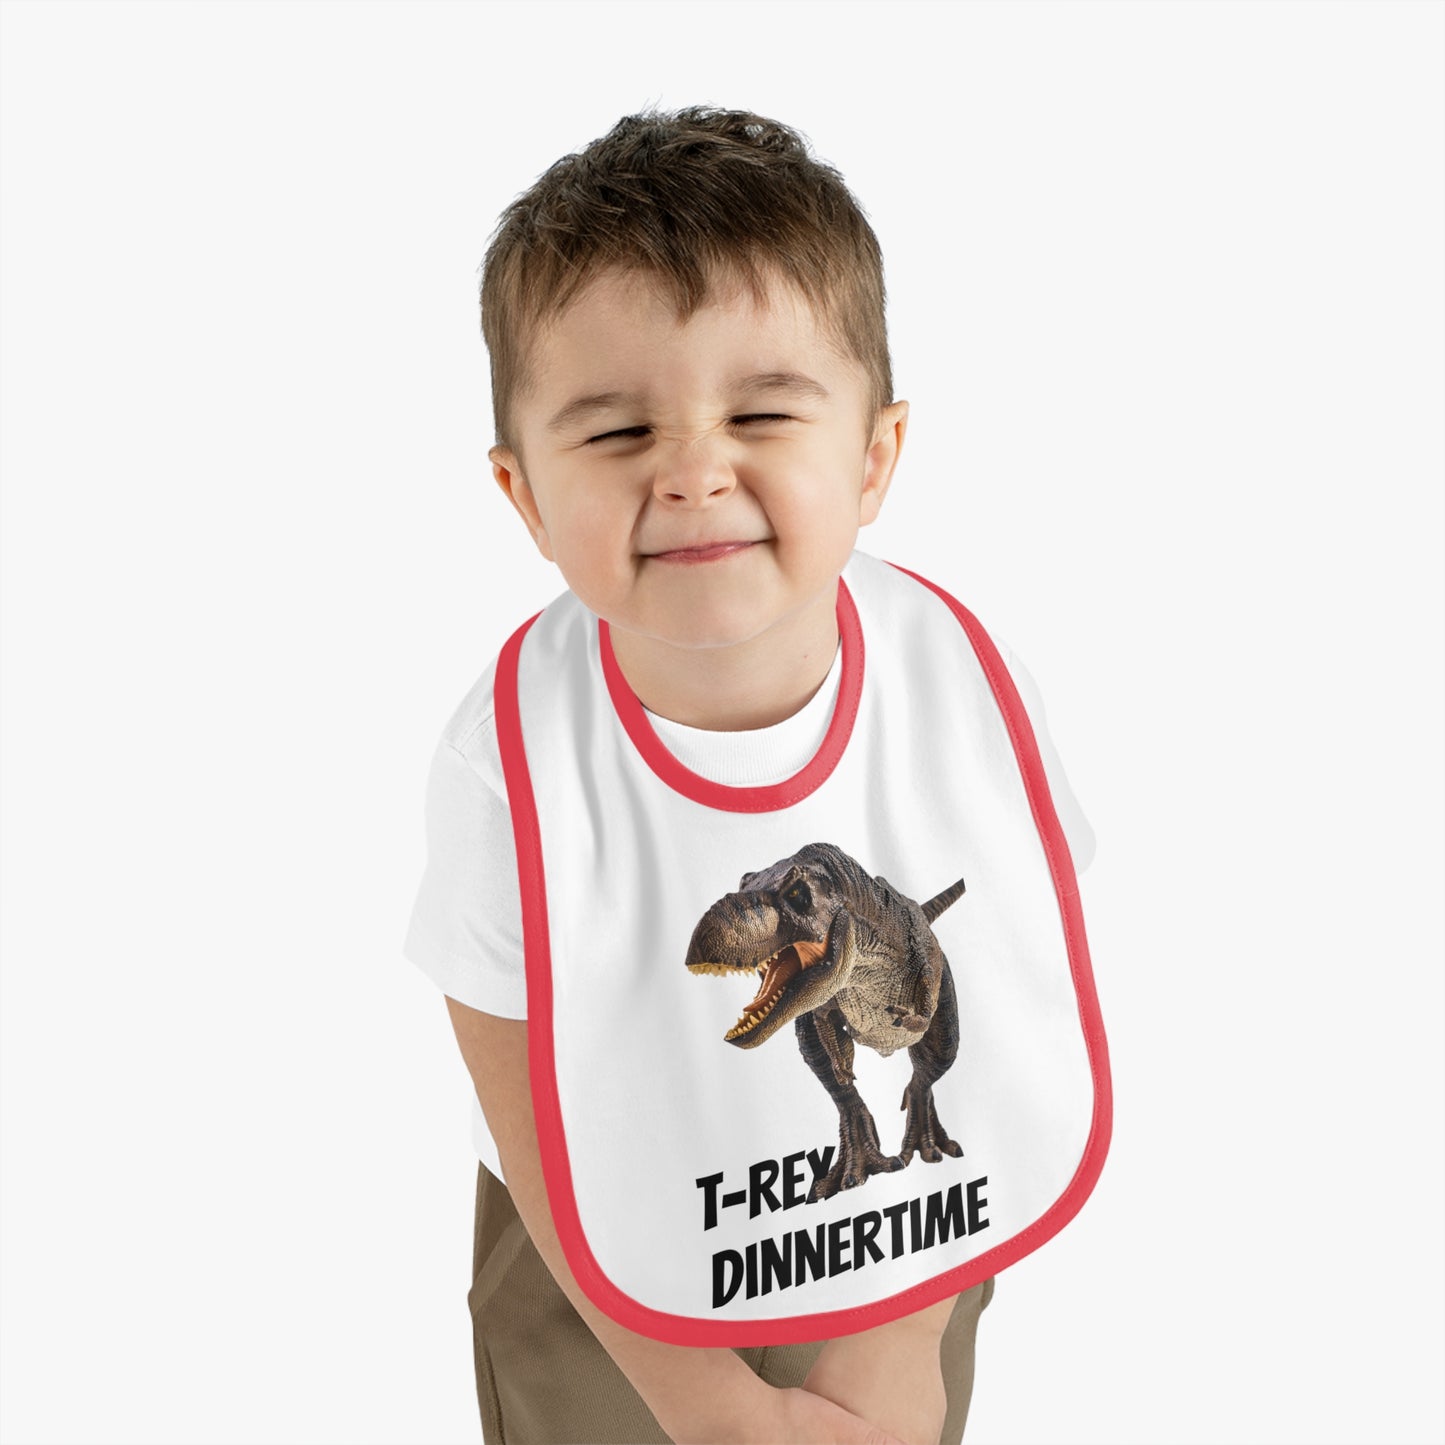 Dinosaur T Rex 3 Dinnertime Baby Boy Jersey Bib